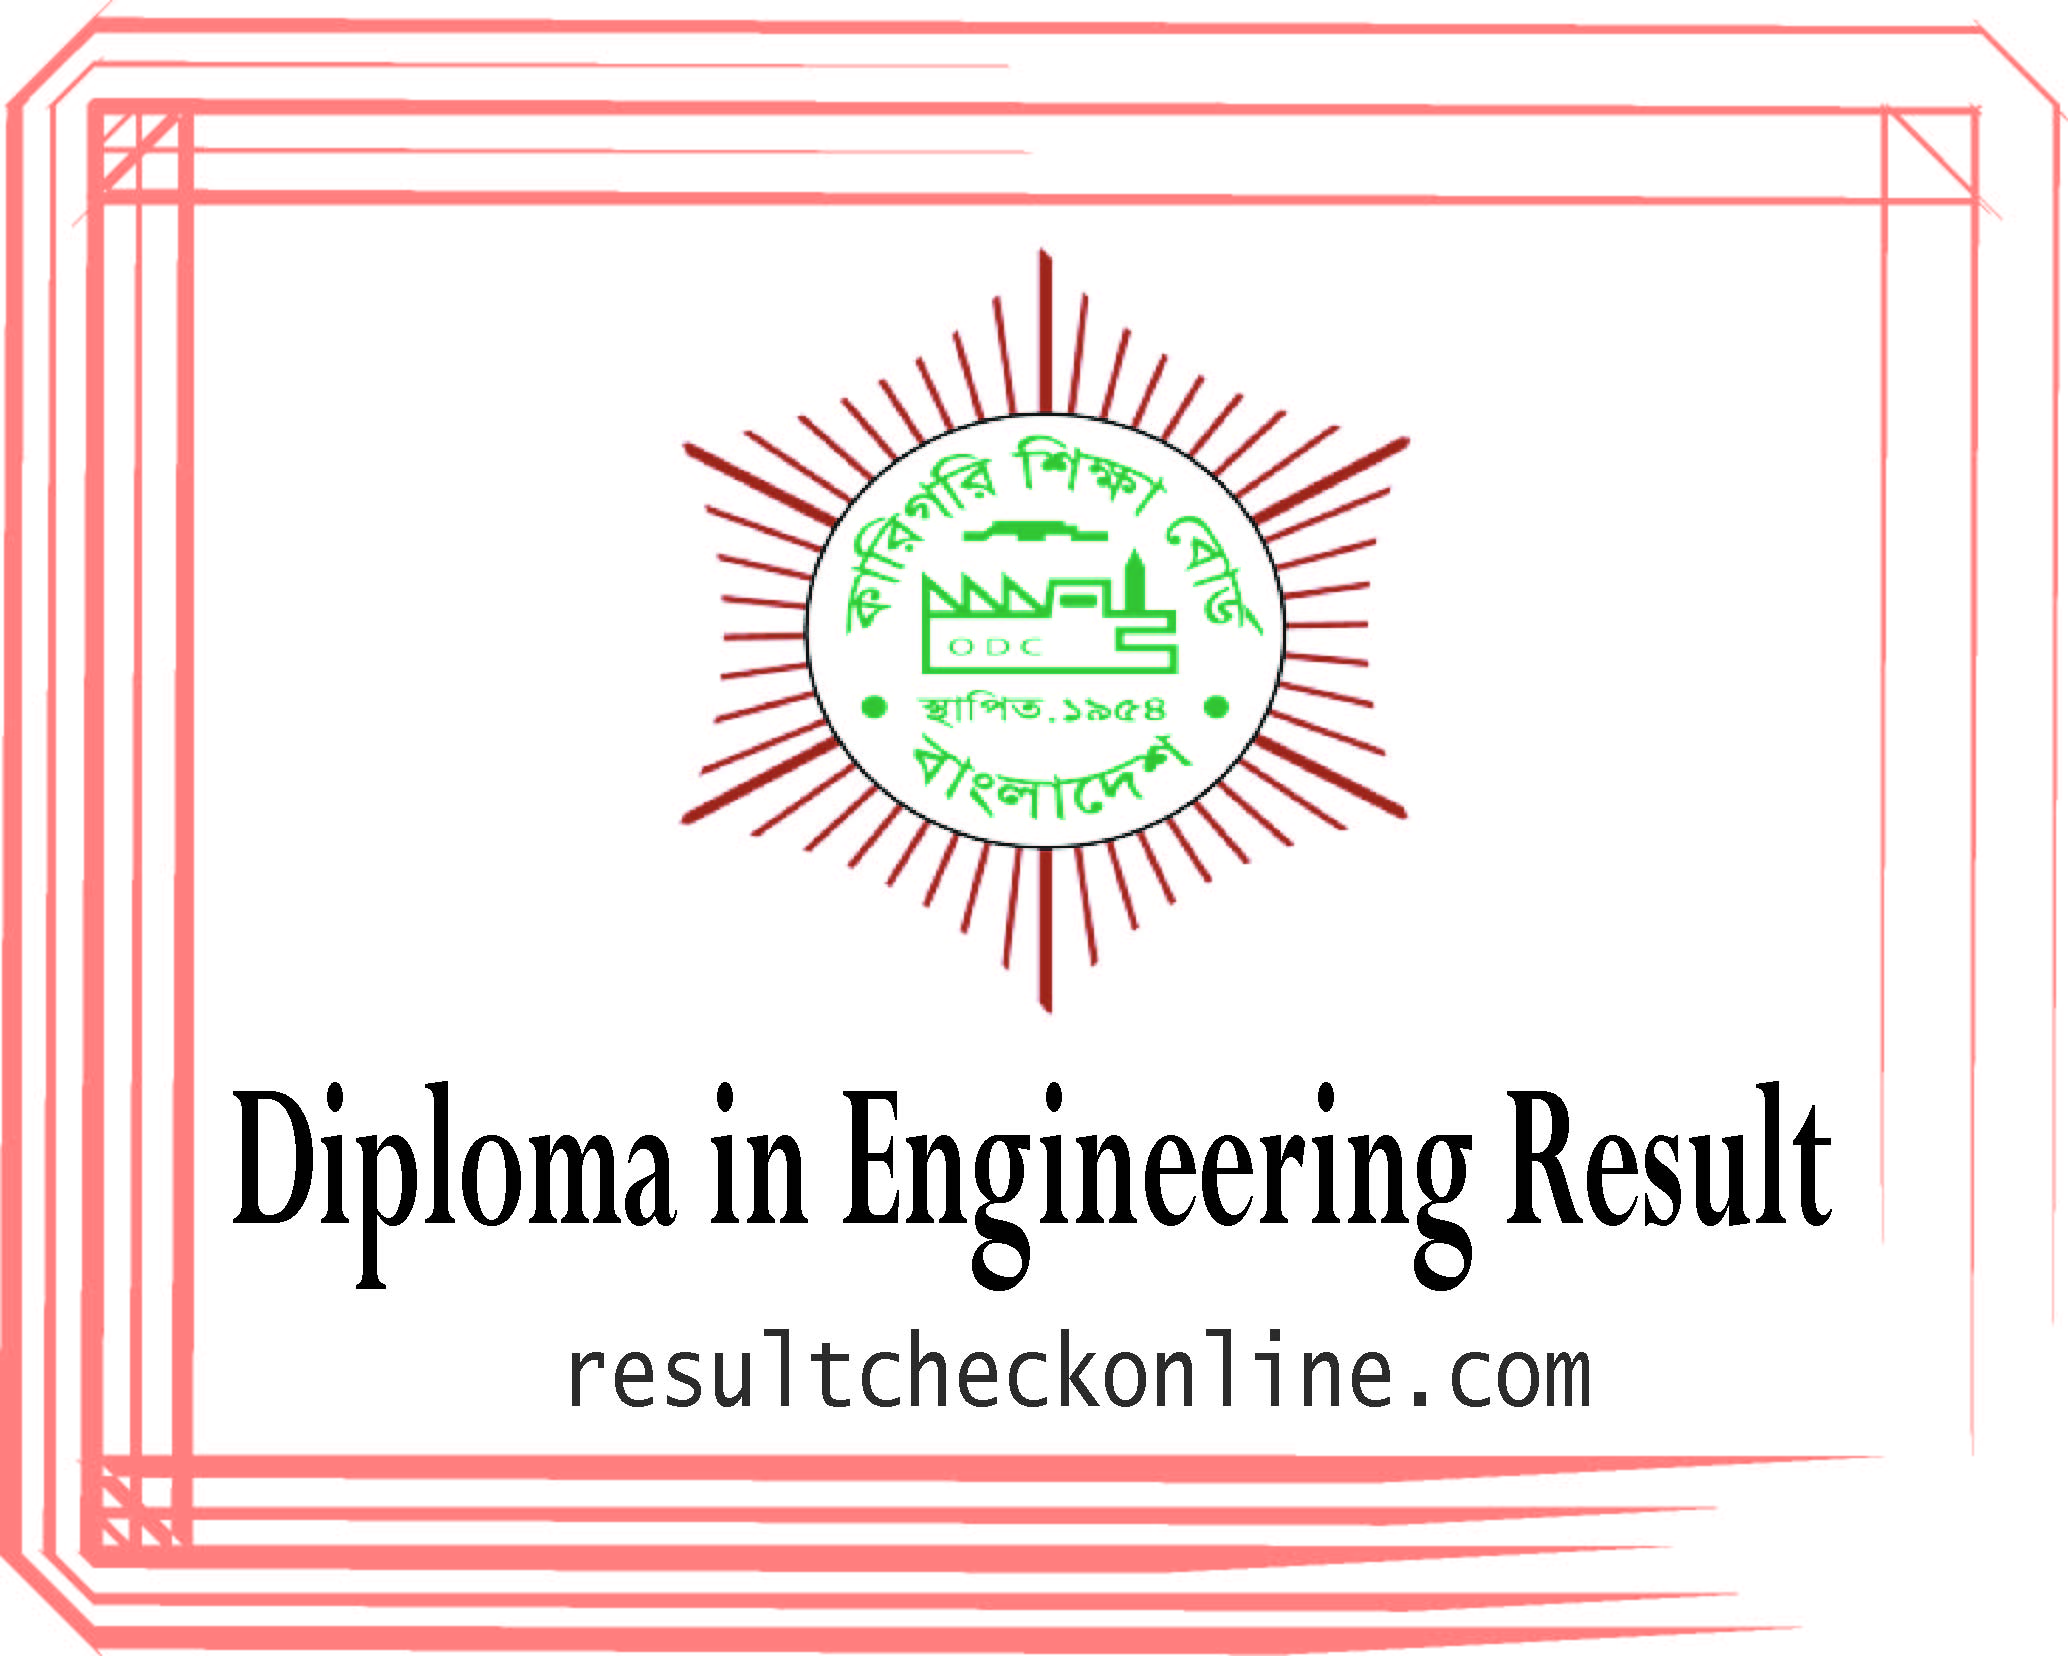 Diploma in Engineering Result